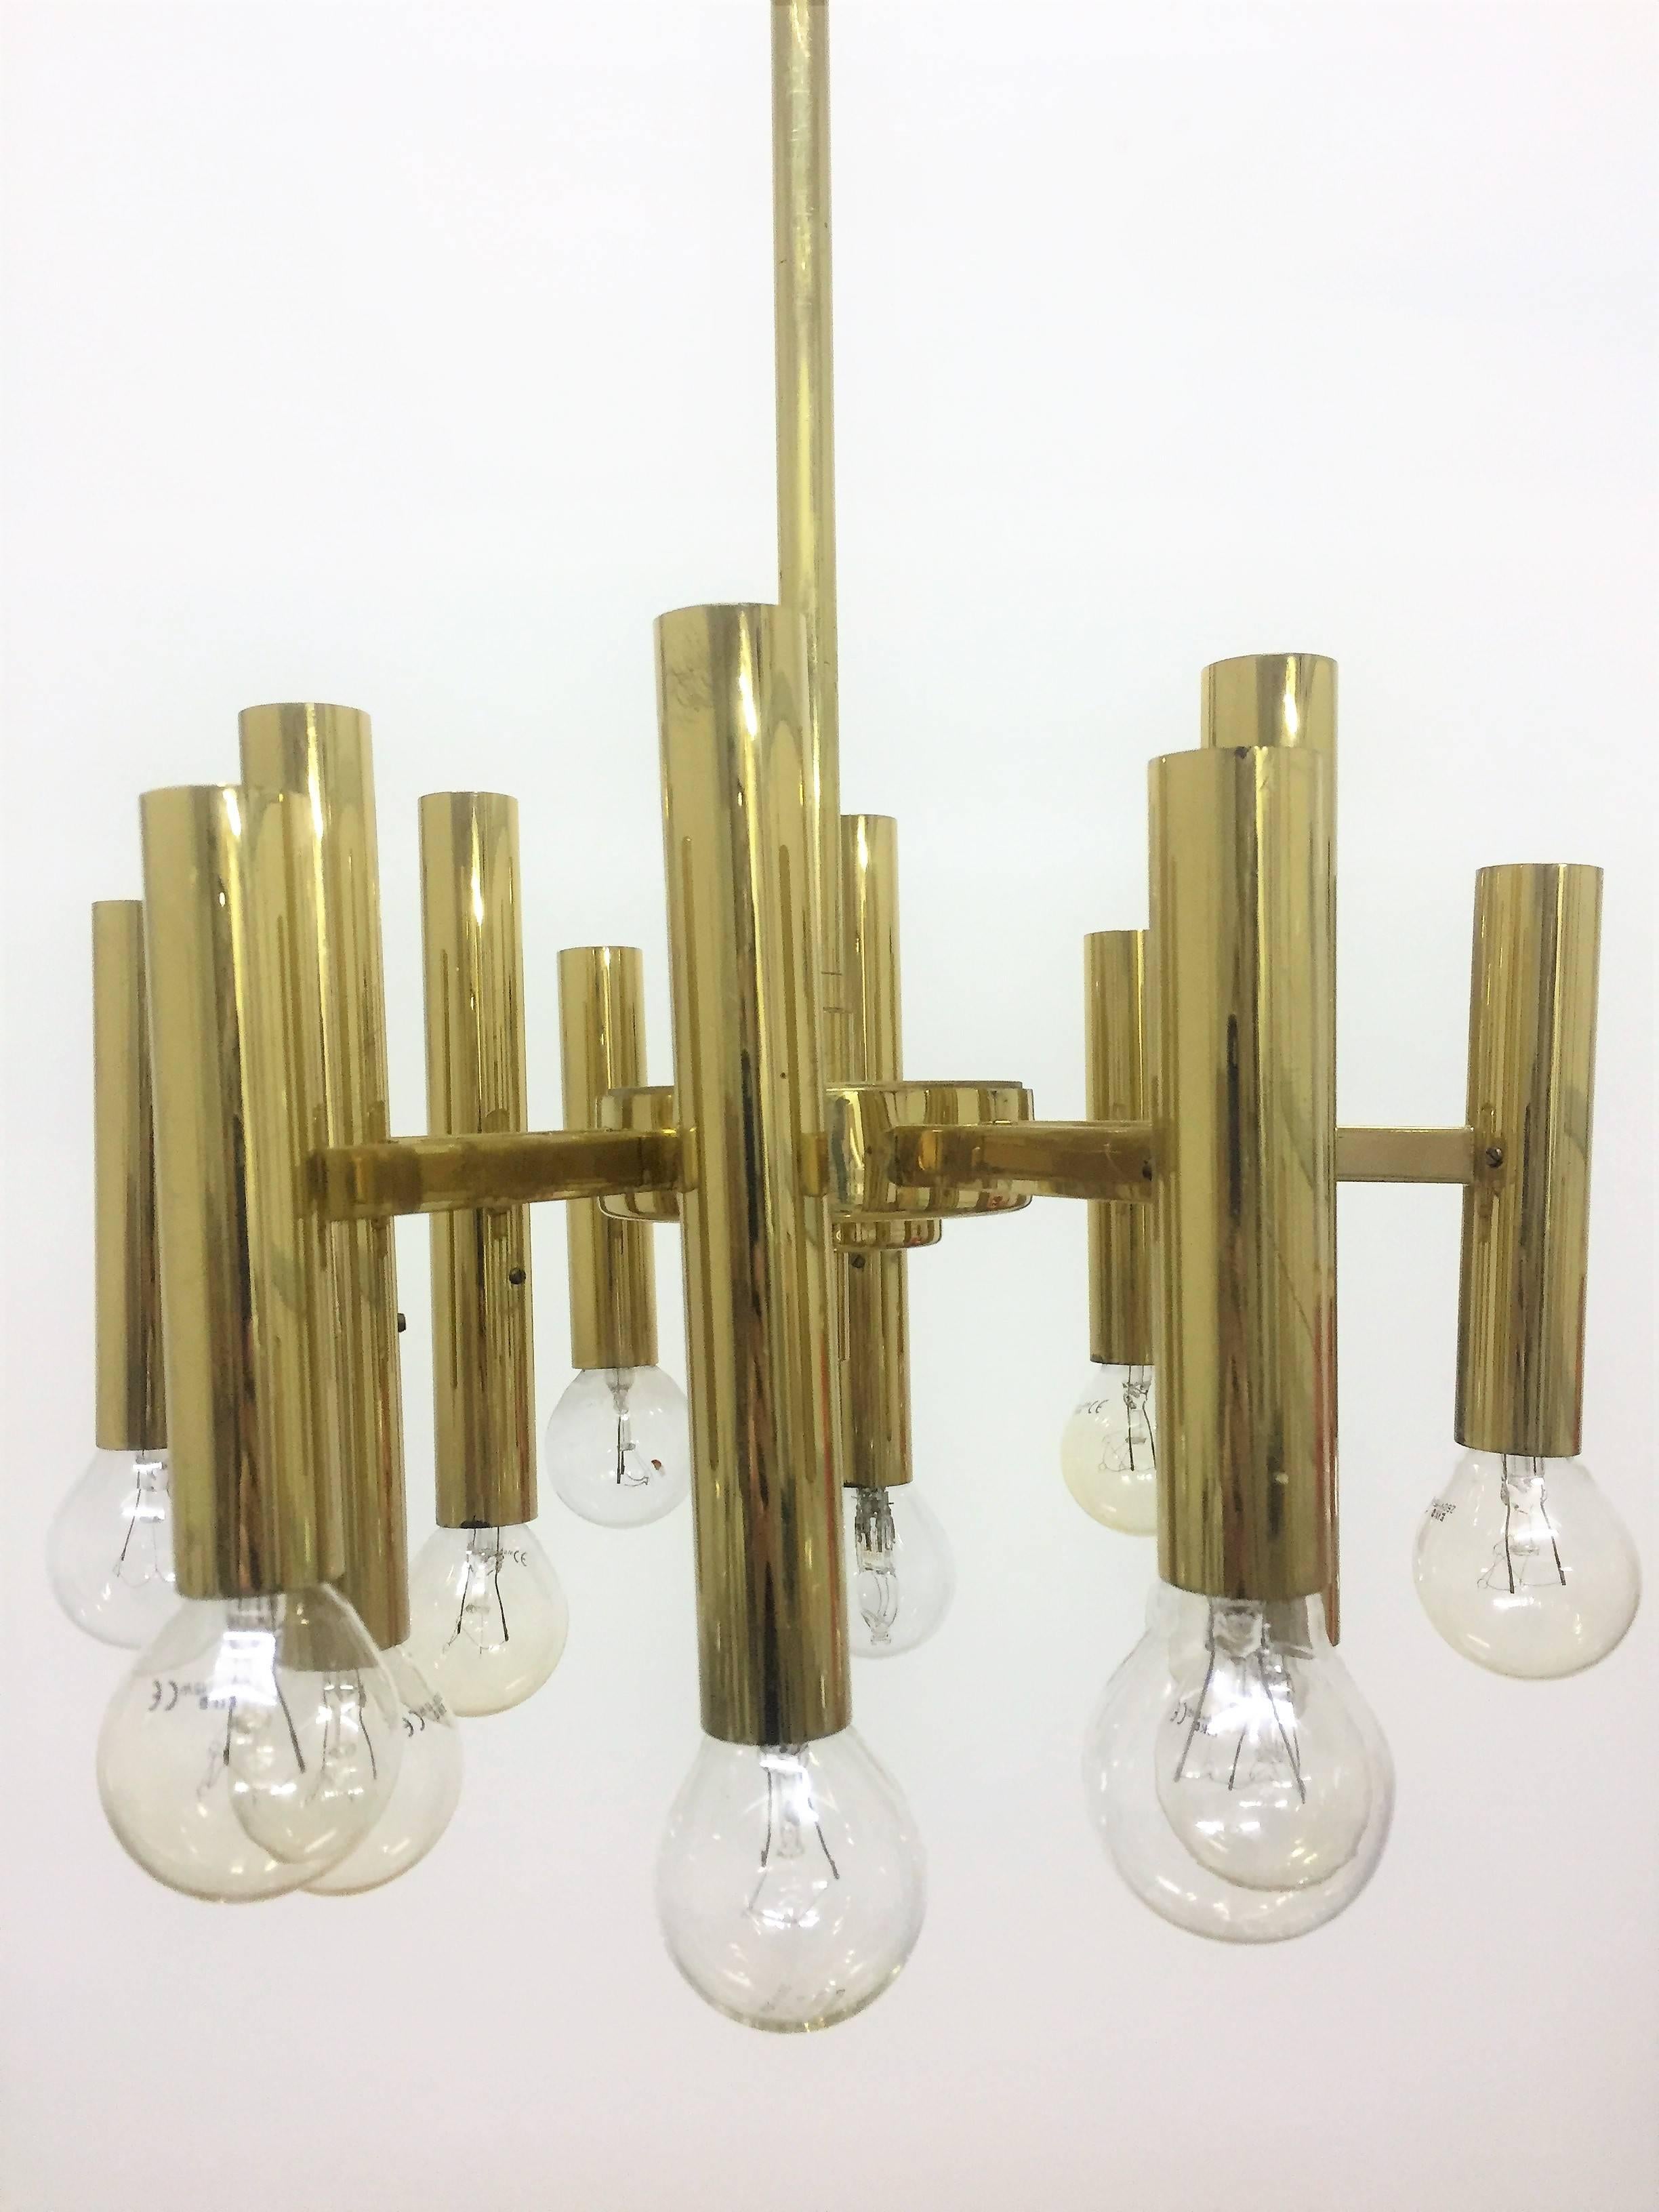 Gilt brass midcentury chandelier by Palwa, Germany circa 1960s.
Socket: 12 x e 14 (Edison) for standard screw bulbs.
